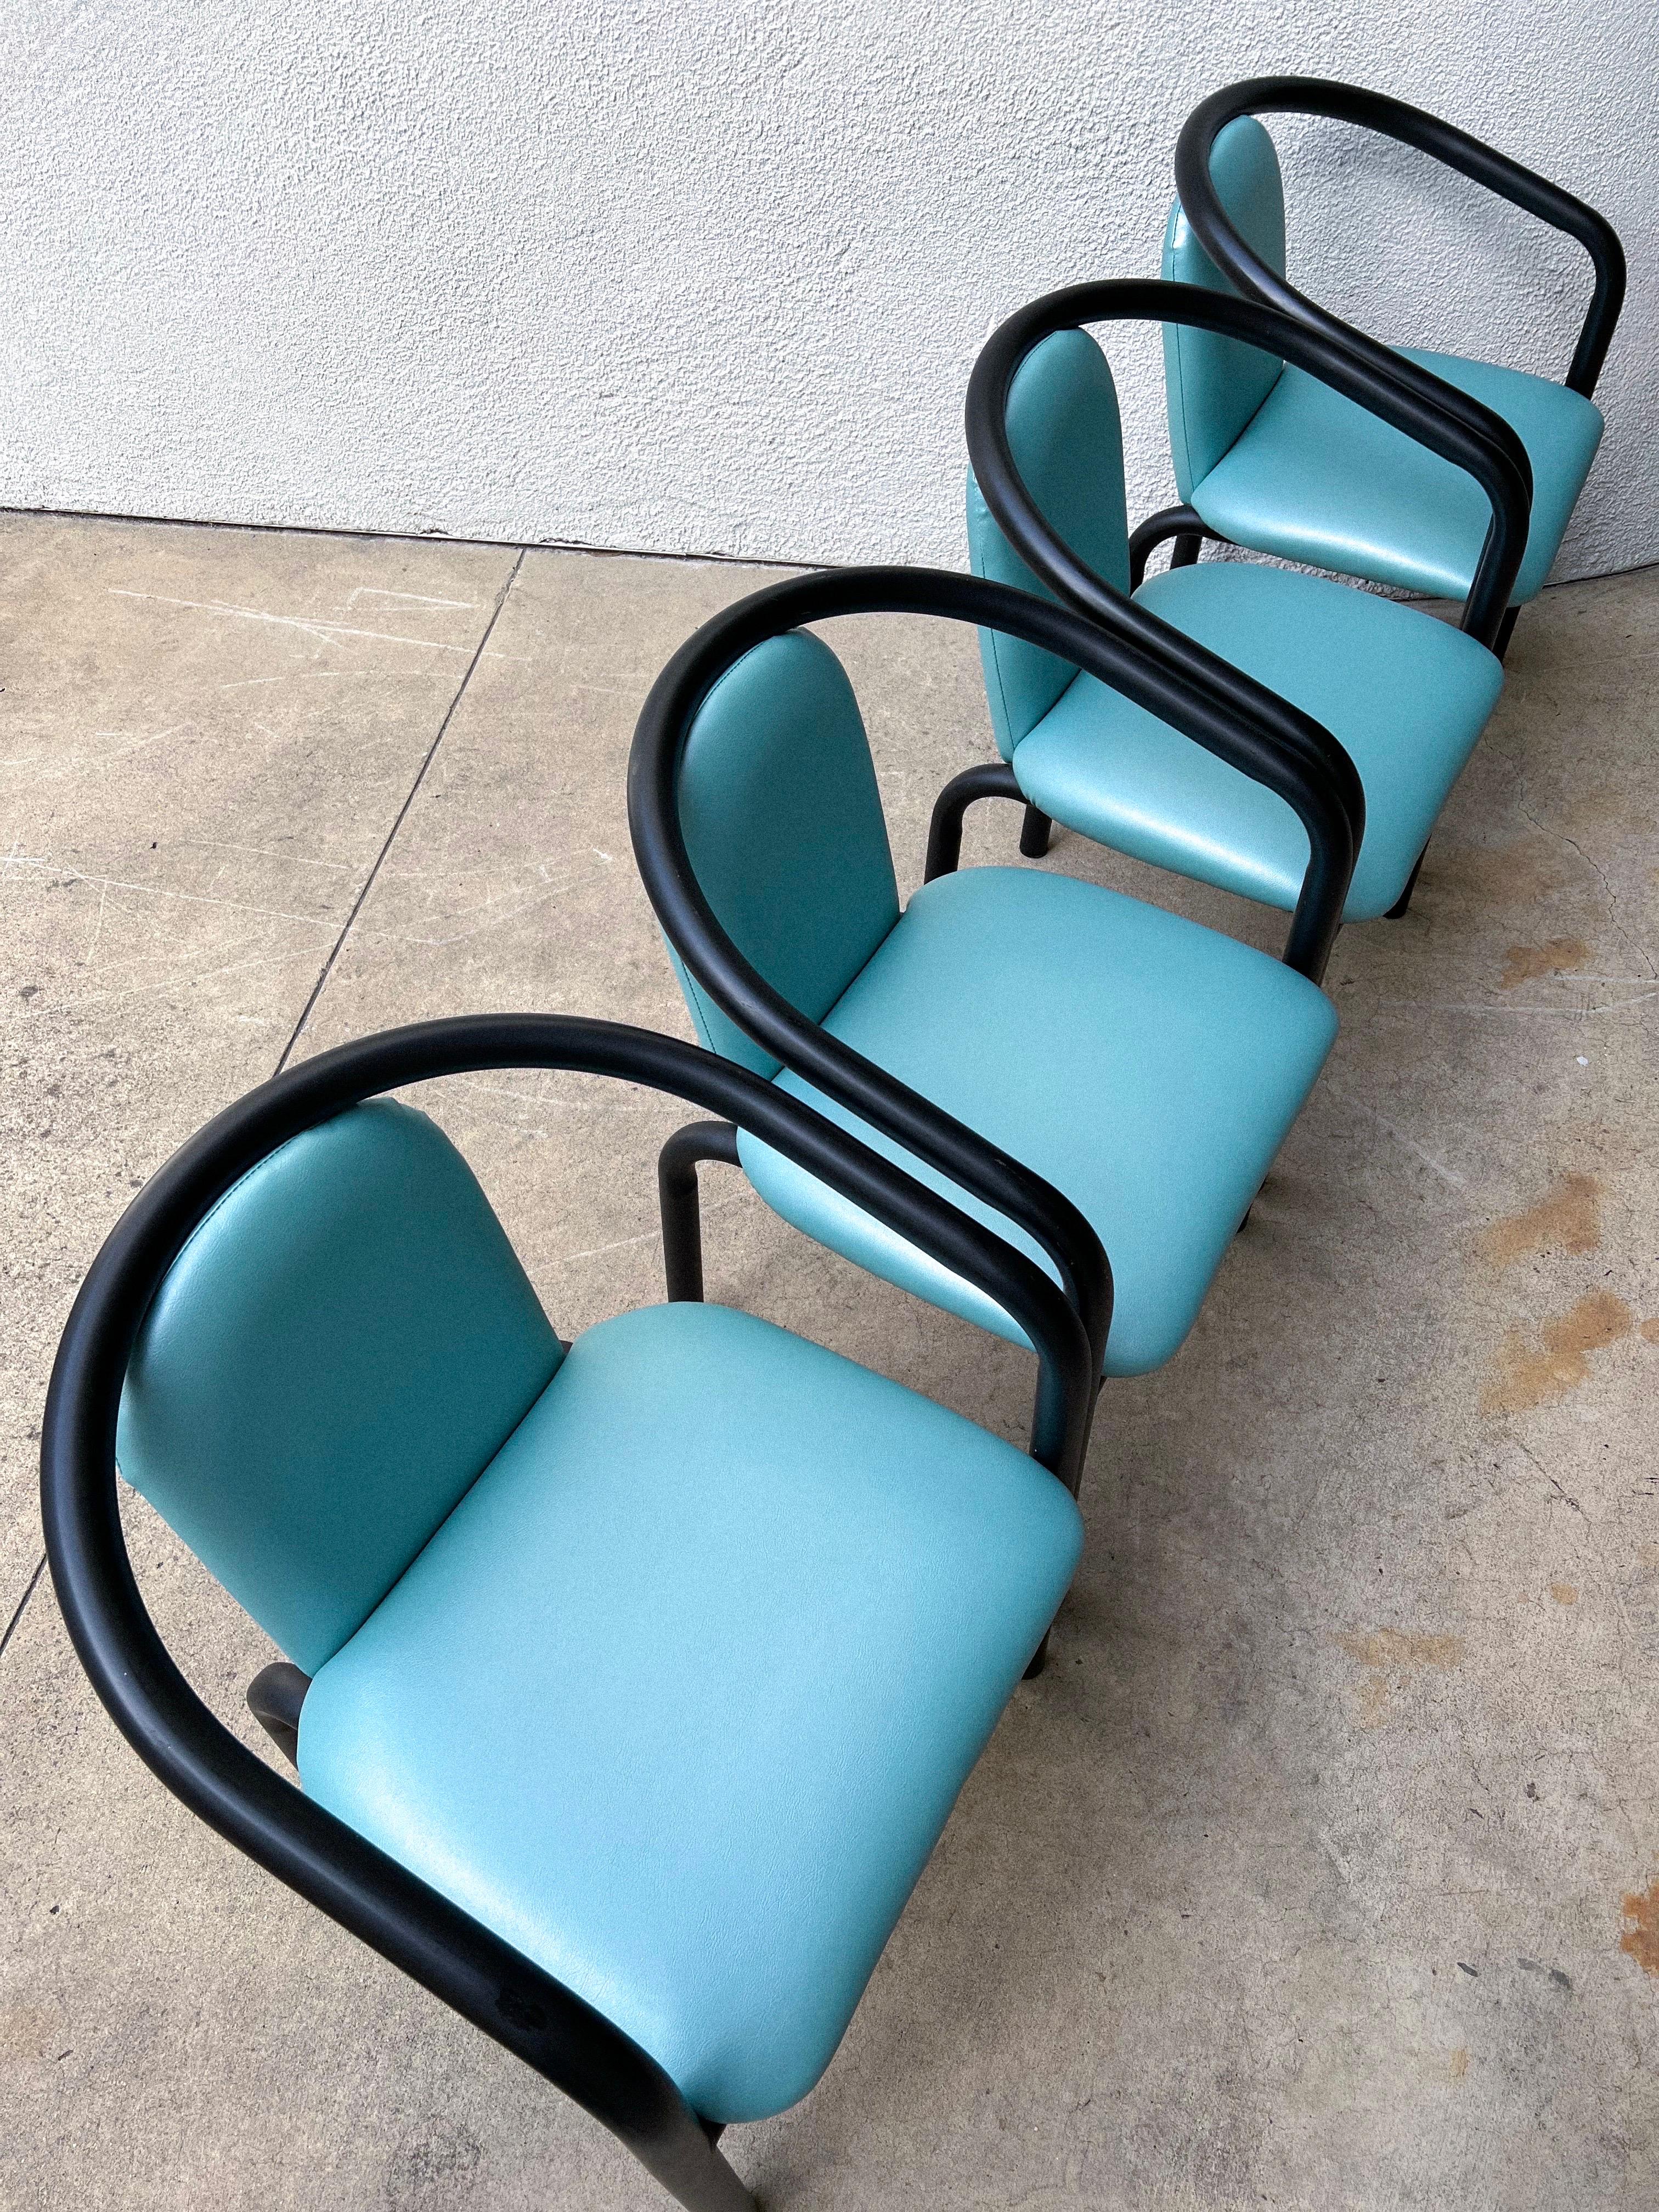 1980s Postmodern Tubular Vinyl Chairs - Set of 4 For Sale 4